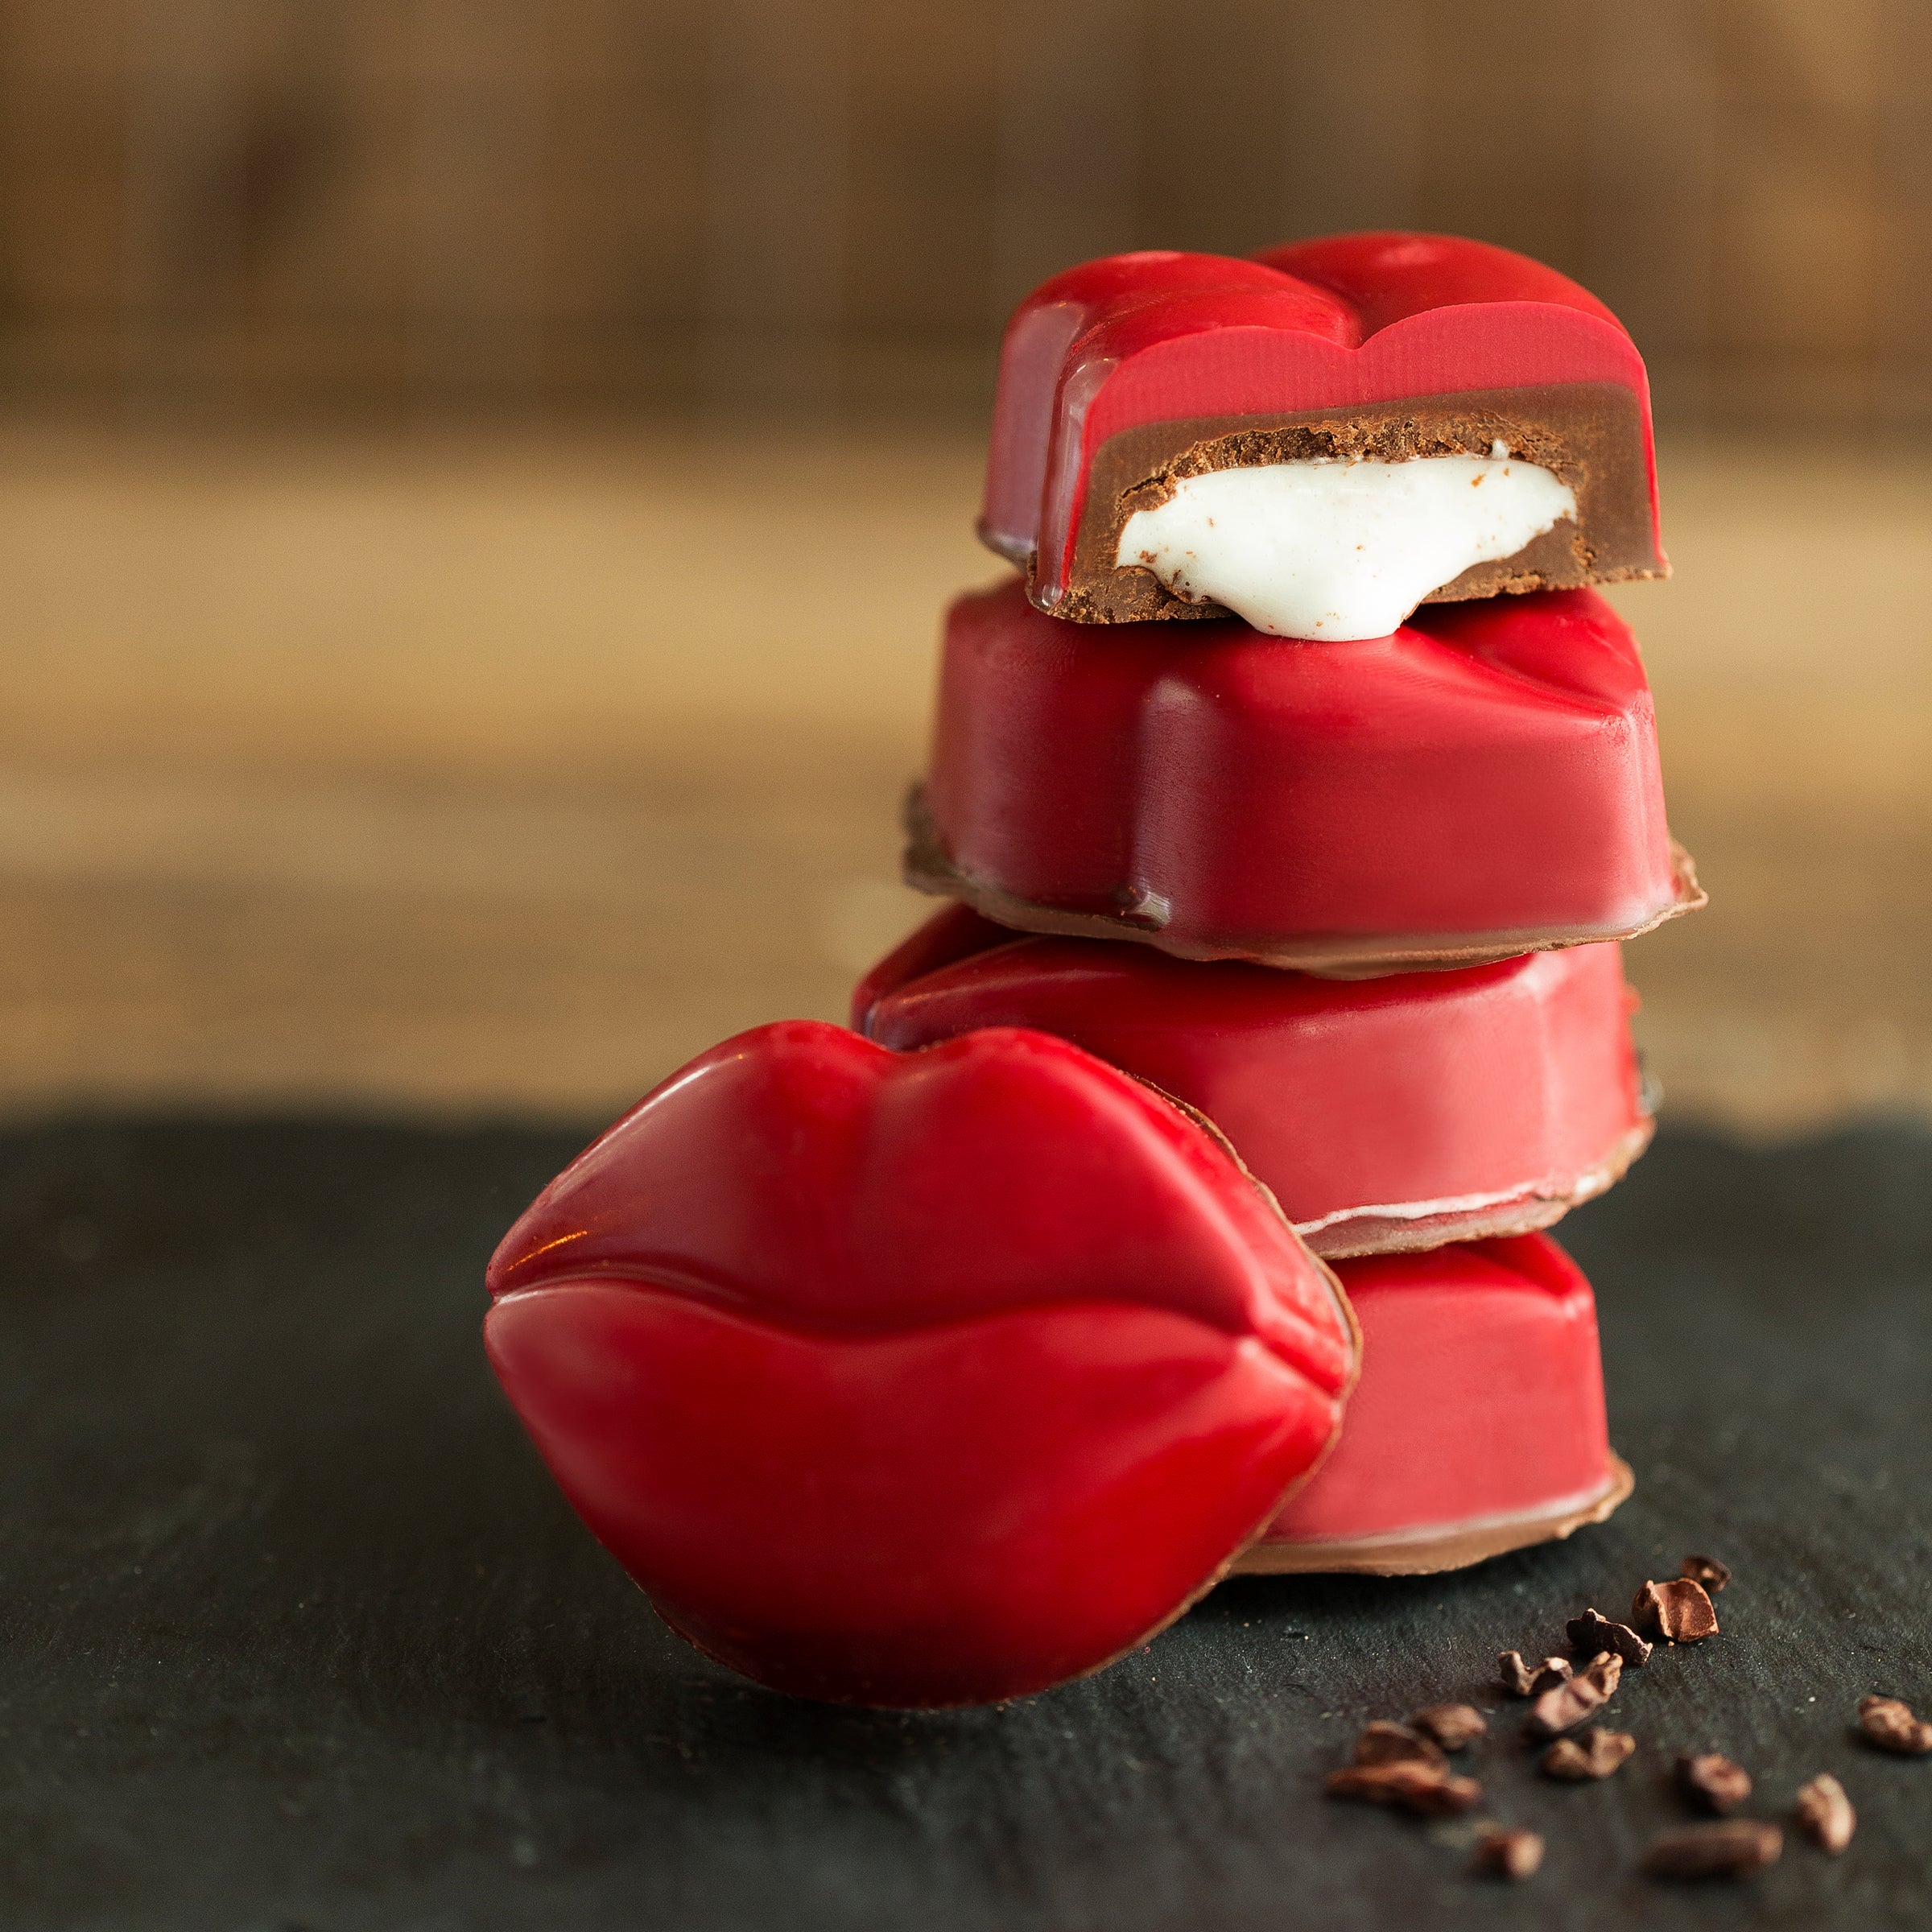 Bombom de chocolate de boca c/ marshmallow 50g – The Goodies Brasil